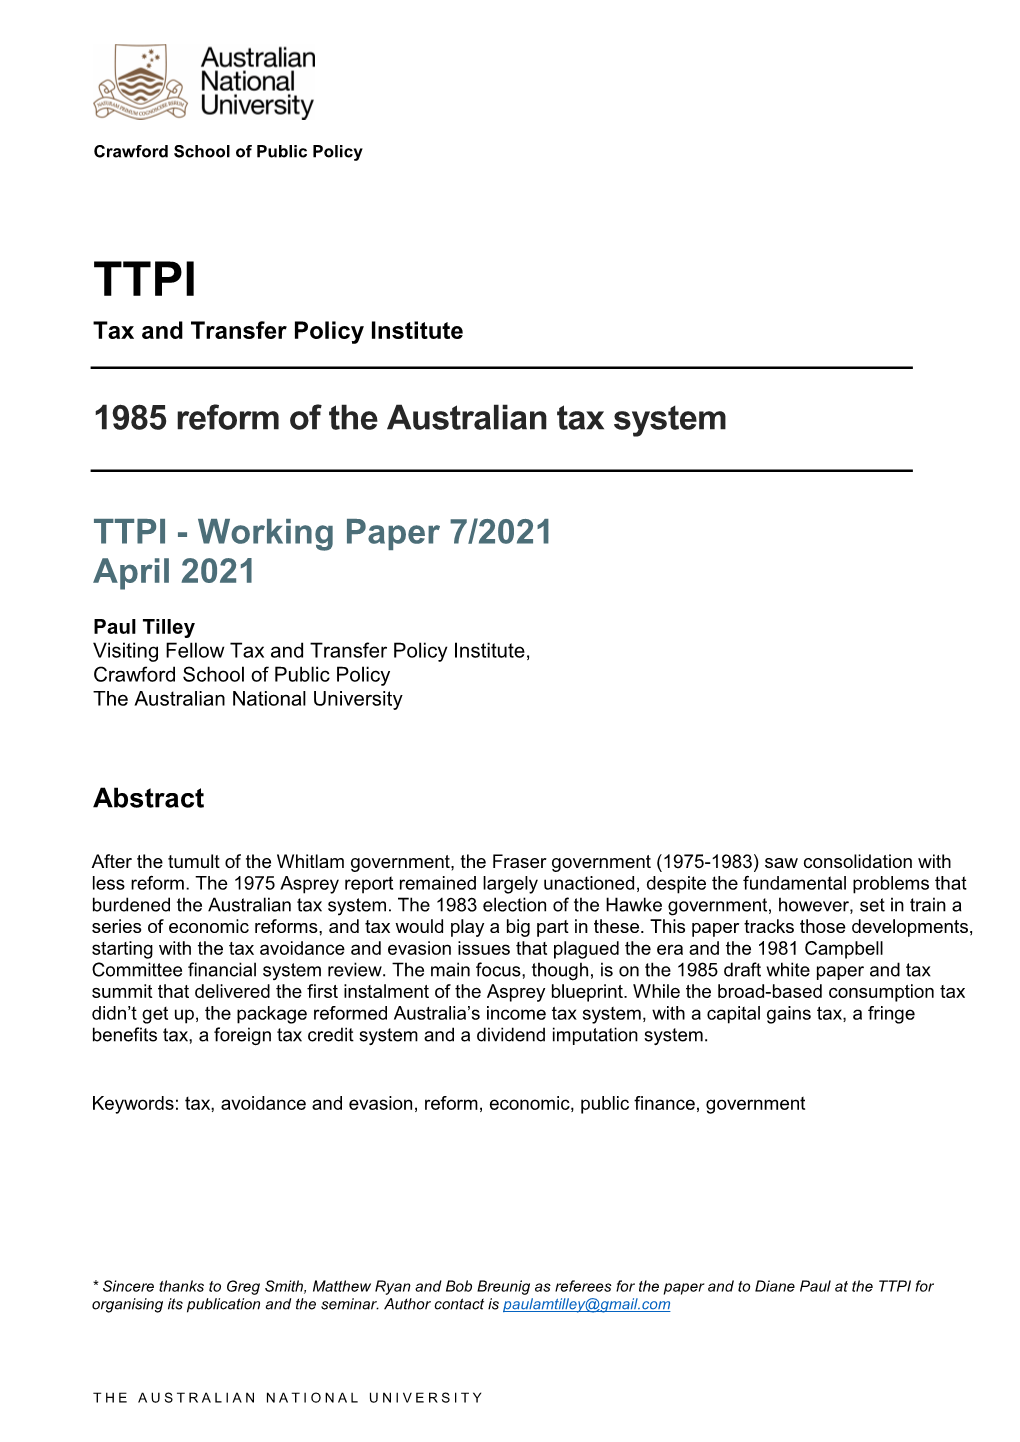 1985 Reform of the Australian Tax System